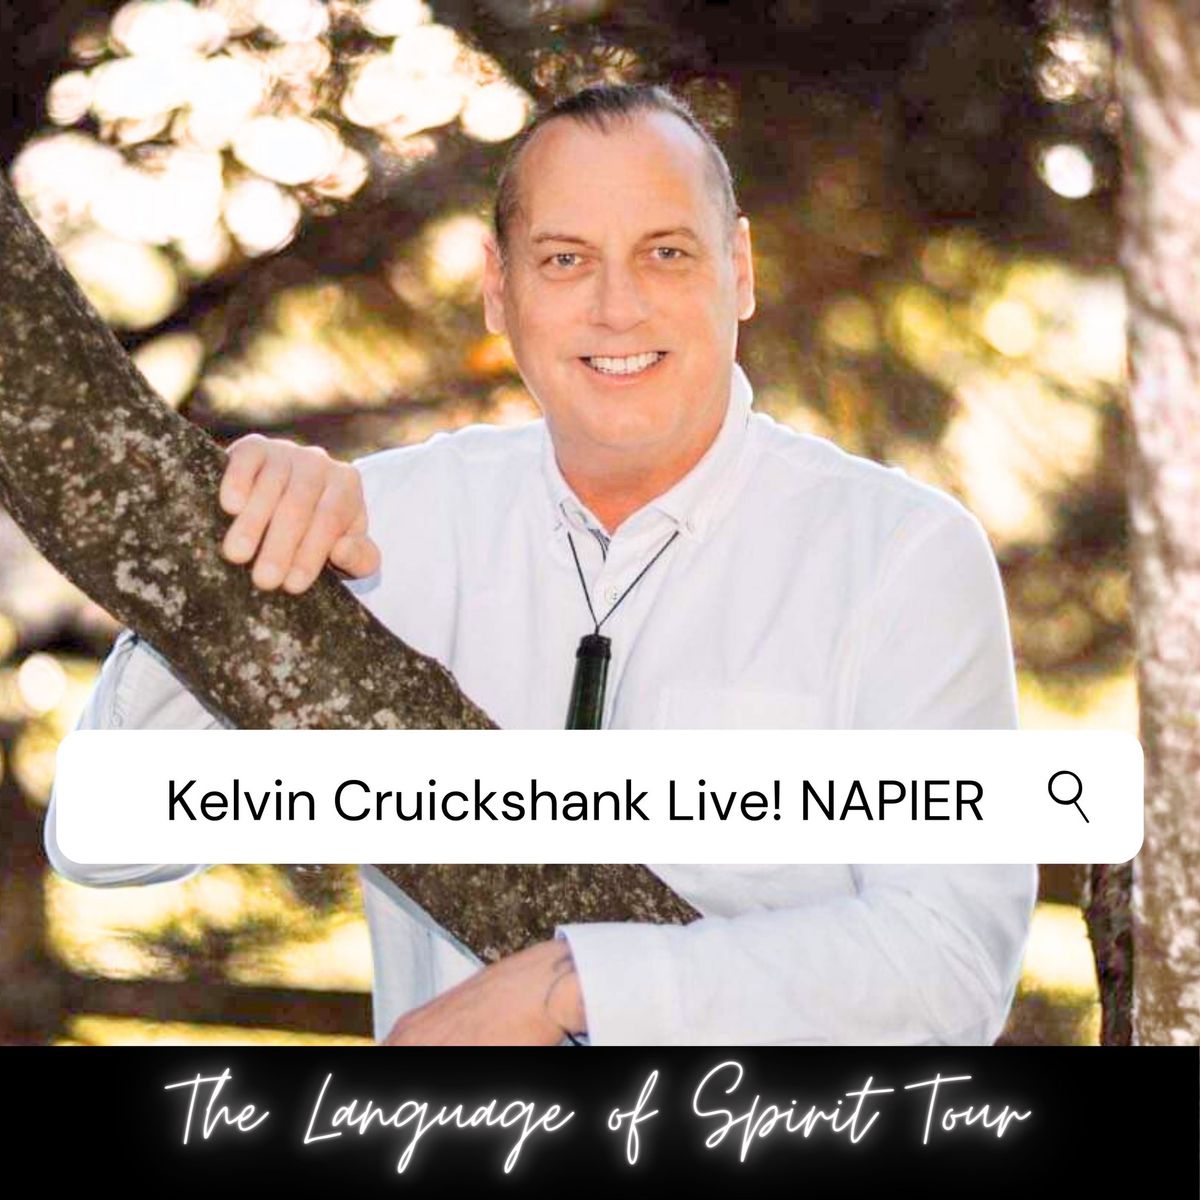 Kelvin Cruickshank Live -  "The Language of Spirit" Tour - NAPIER